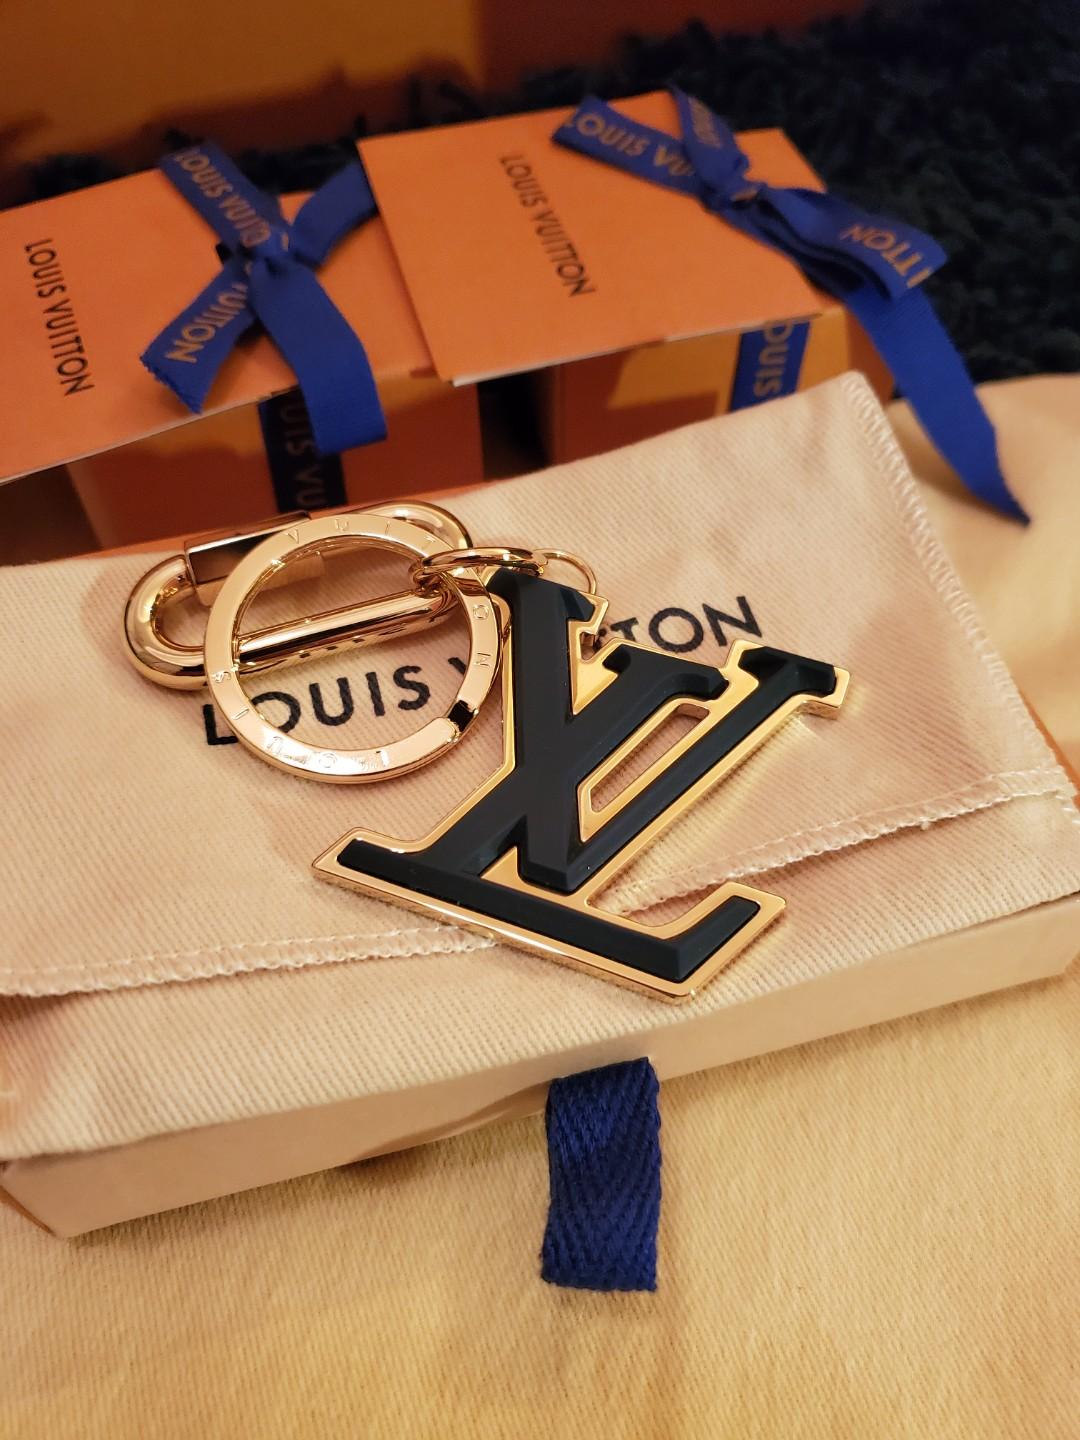 Louis Vuitton party favor with purse holdet charm